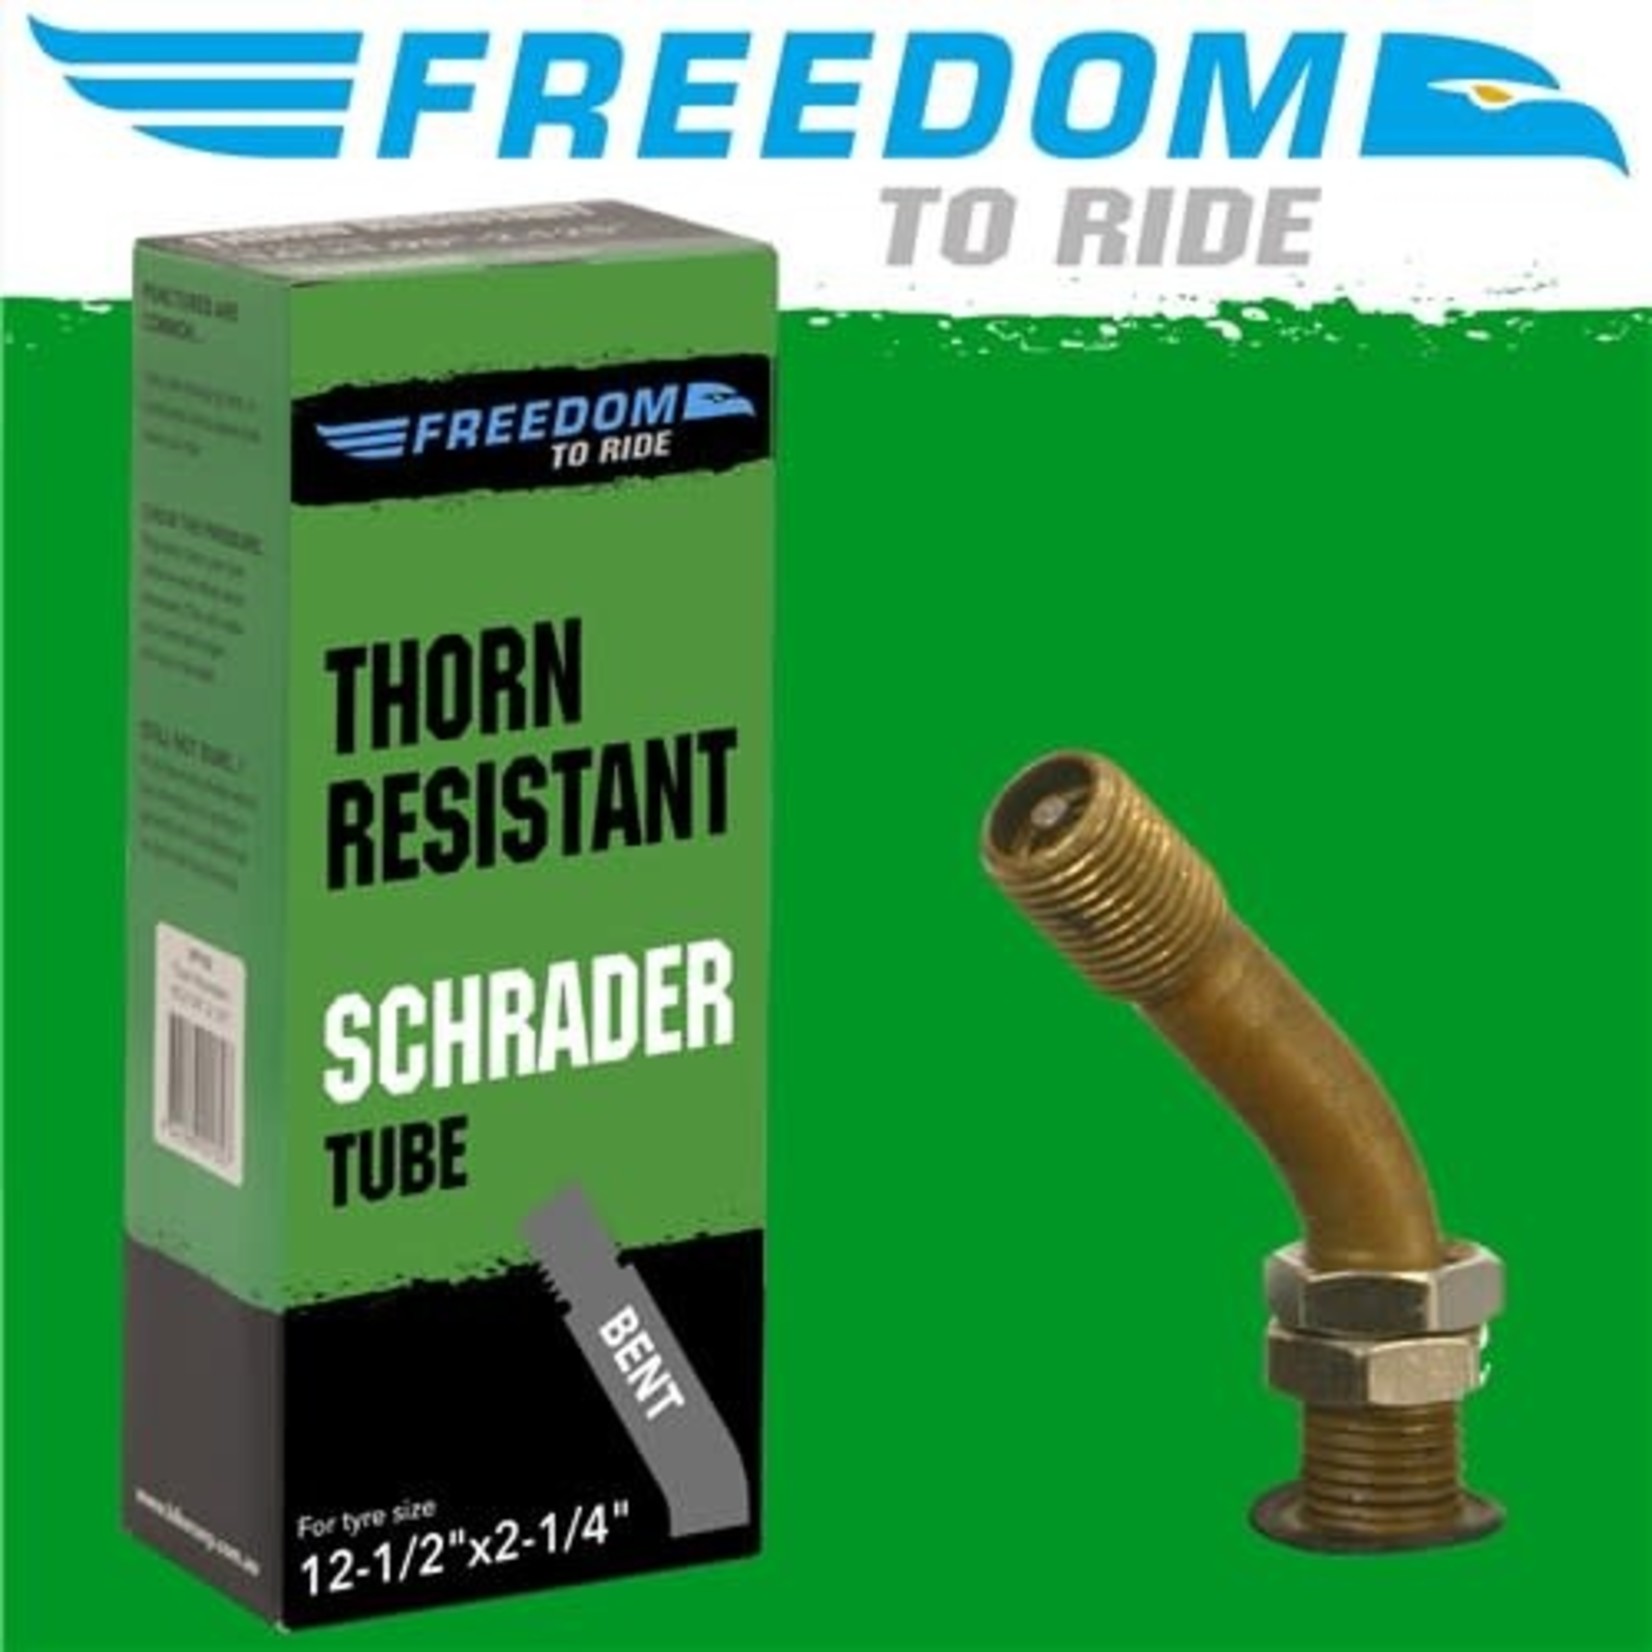 Freedom Freedom Thorn Resistant Bike Tube - 12-1/2" X 2-1/4" - Schrader Bent Valve